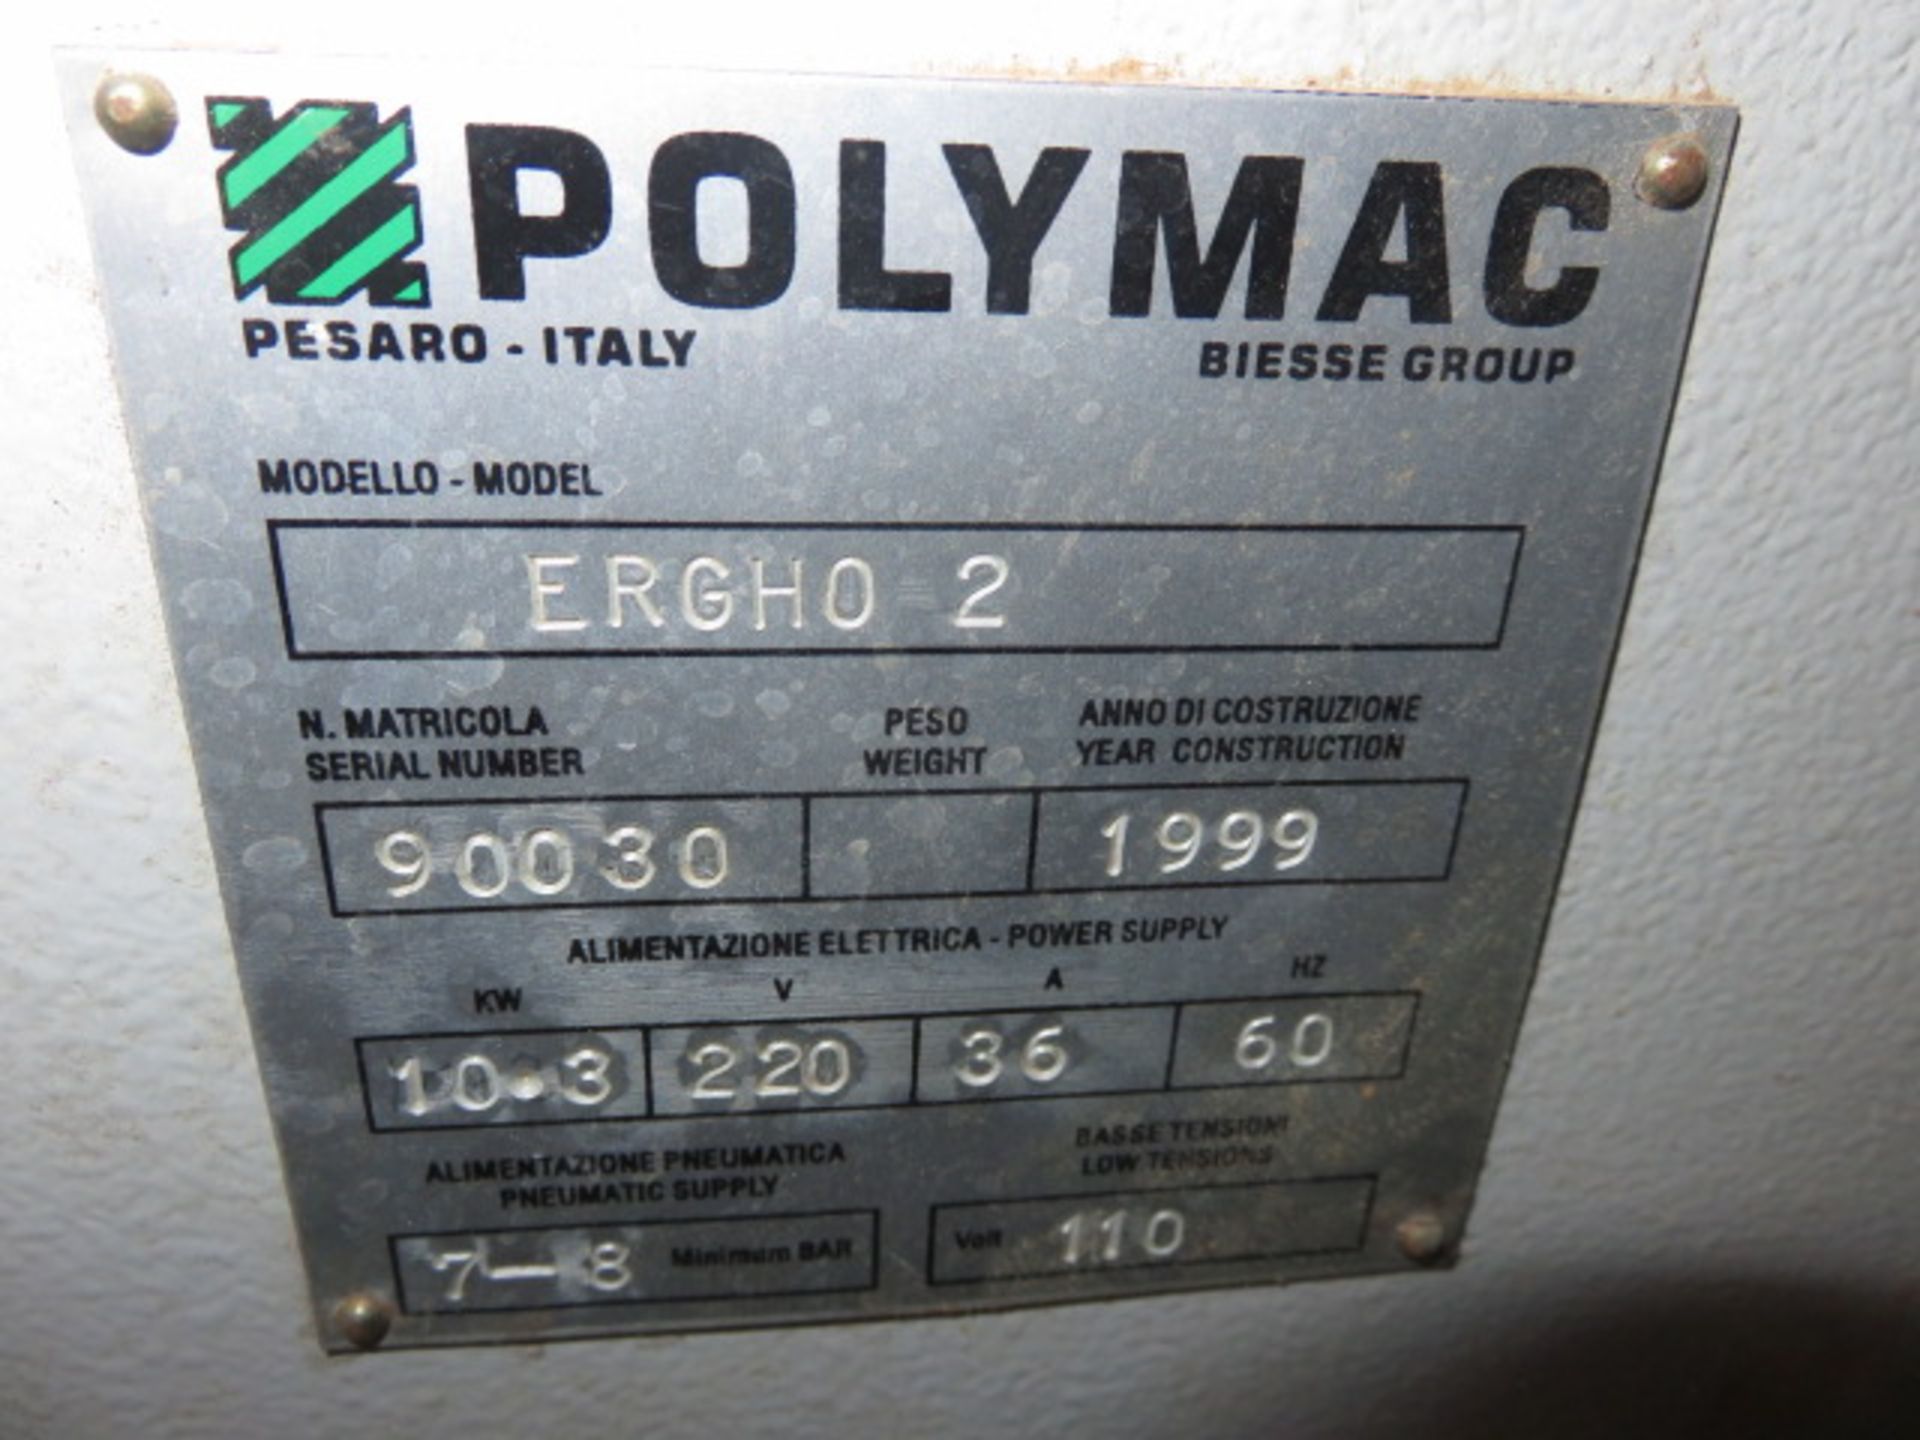 1999 BIESSE POLYMAC ERGHO 2 SINGLE SIDED EDGE BANDER, S/N 90030, UNIOP CONTROL, 15 mm (5/8) Cap... - Image 5 of 9